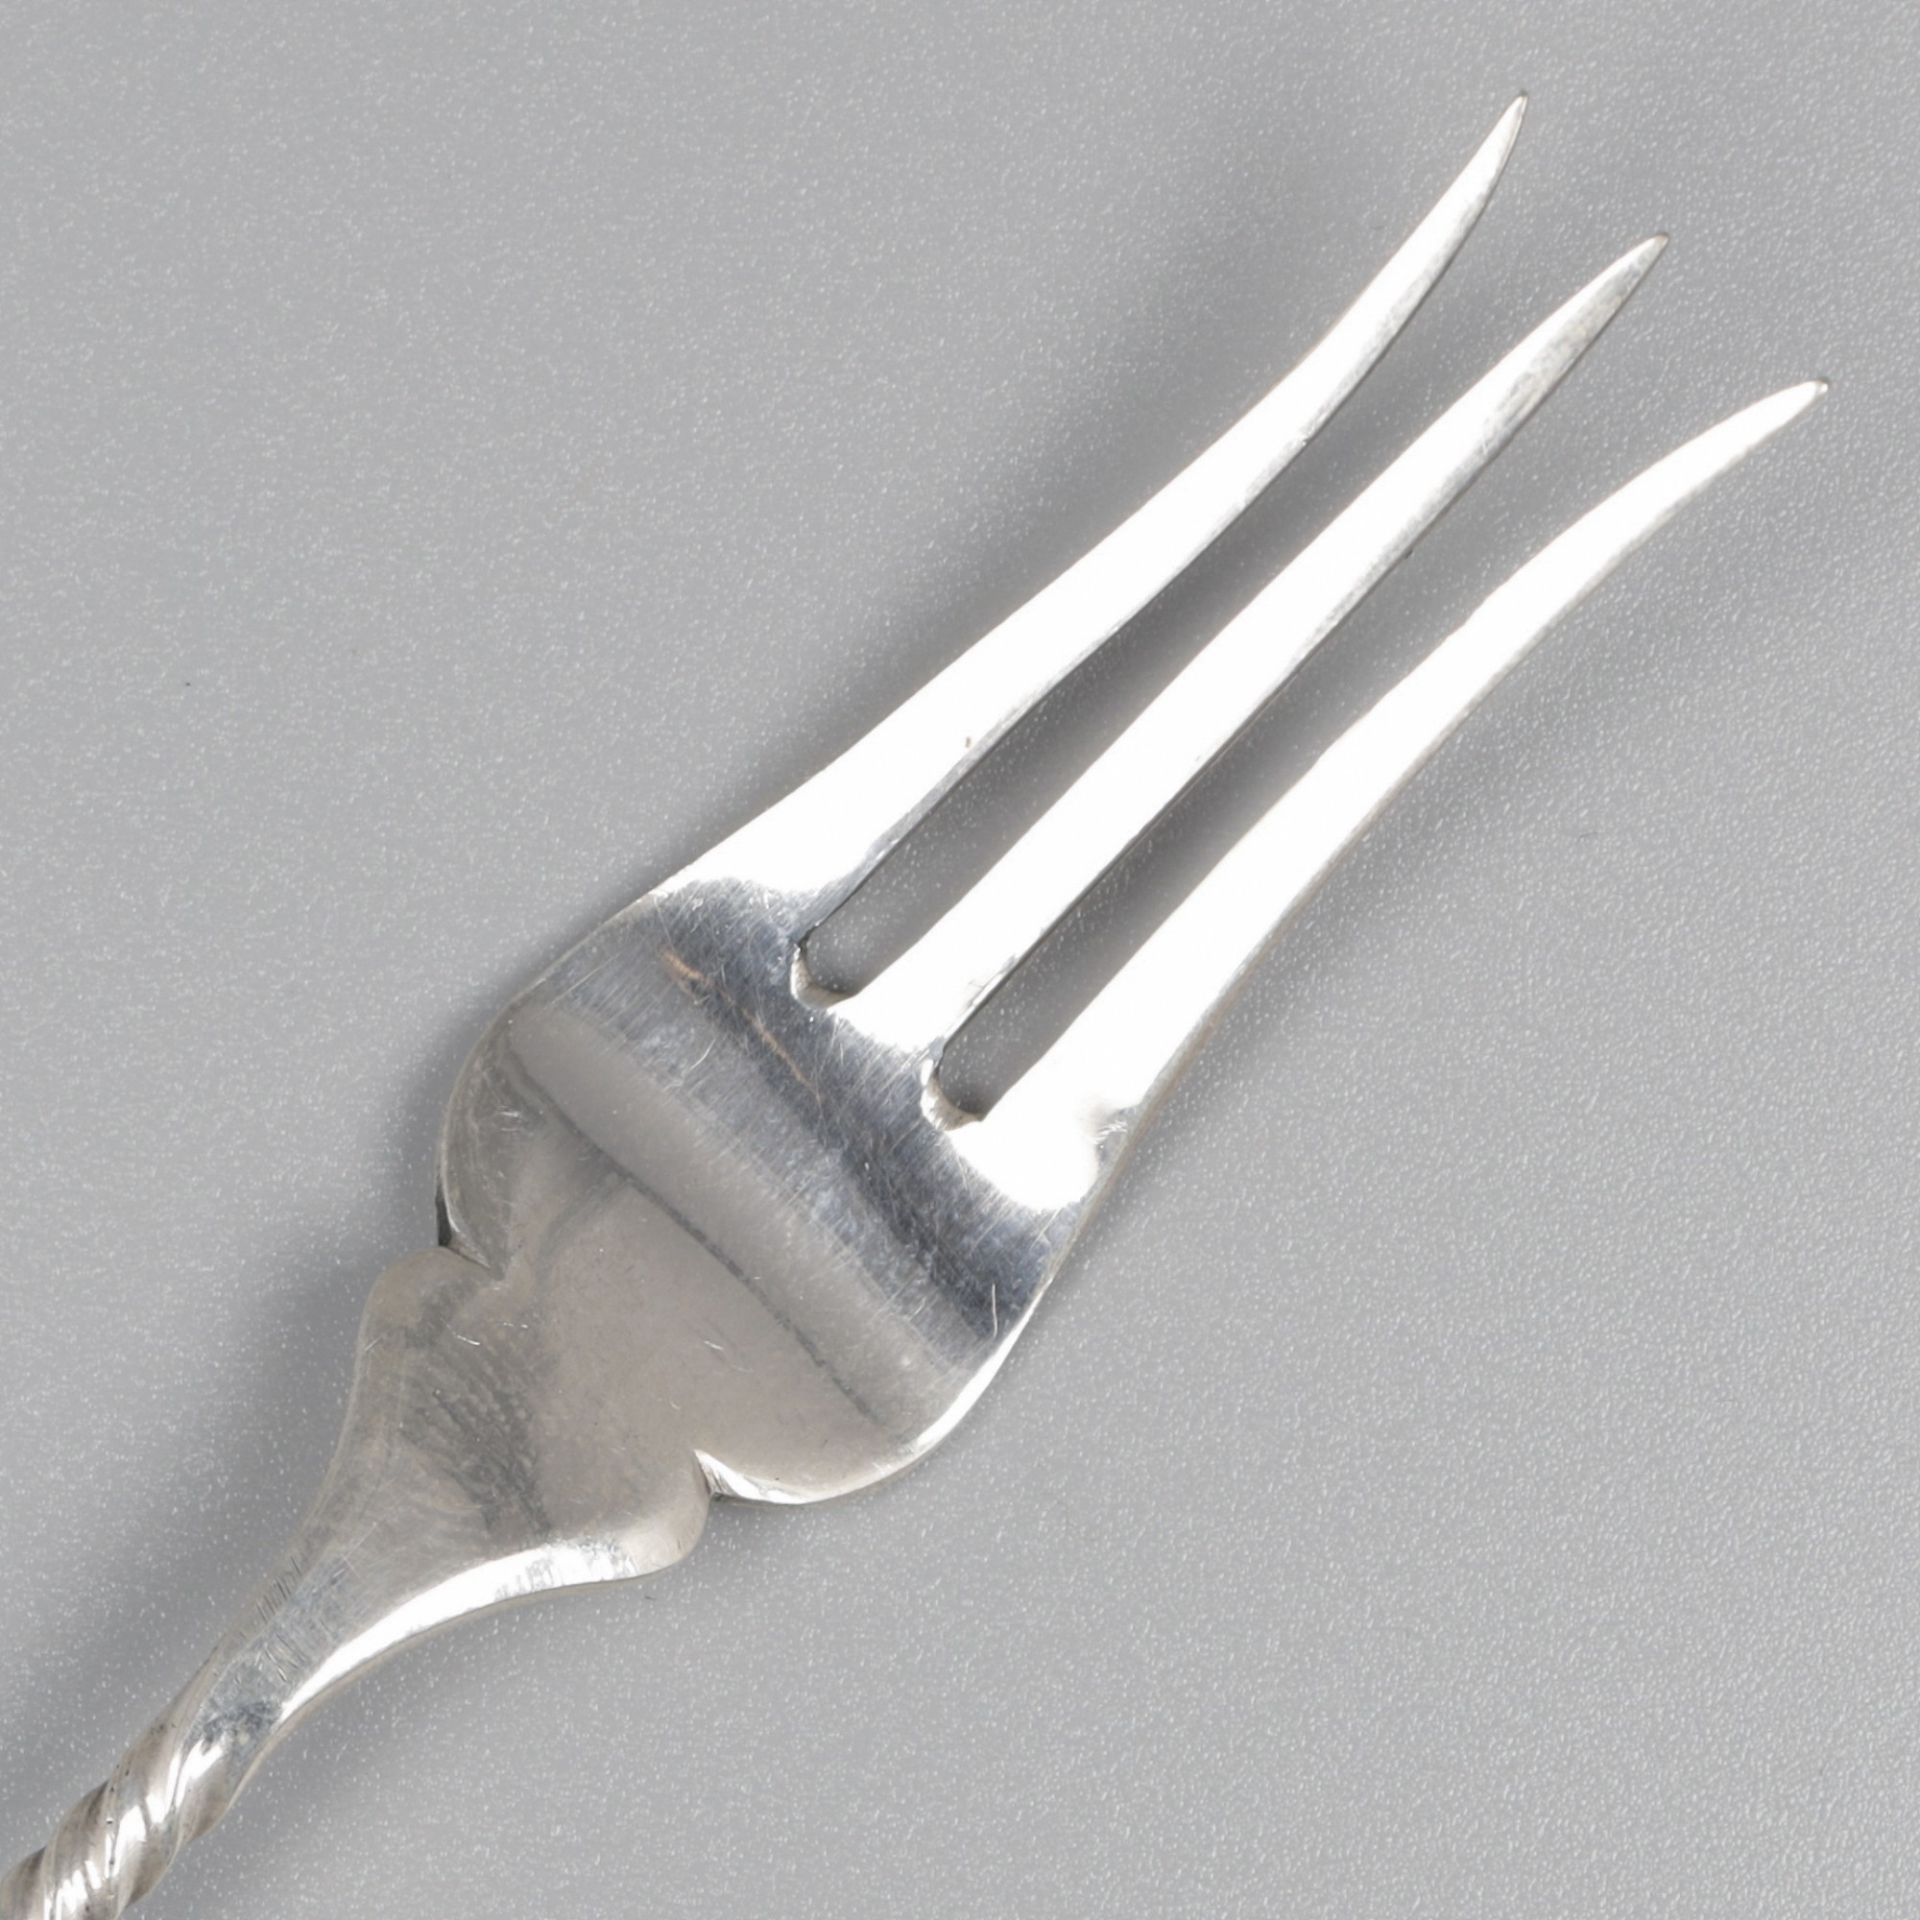 No reserve - 4-piece lot of pickle forks (2 sets) silver. - Image 5 of 6